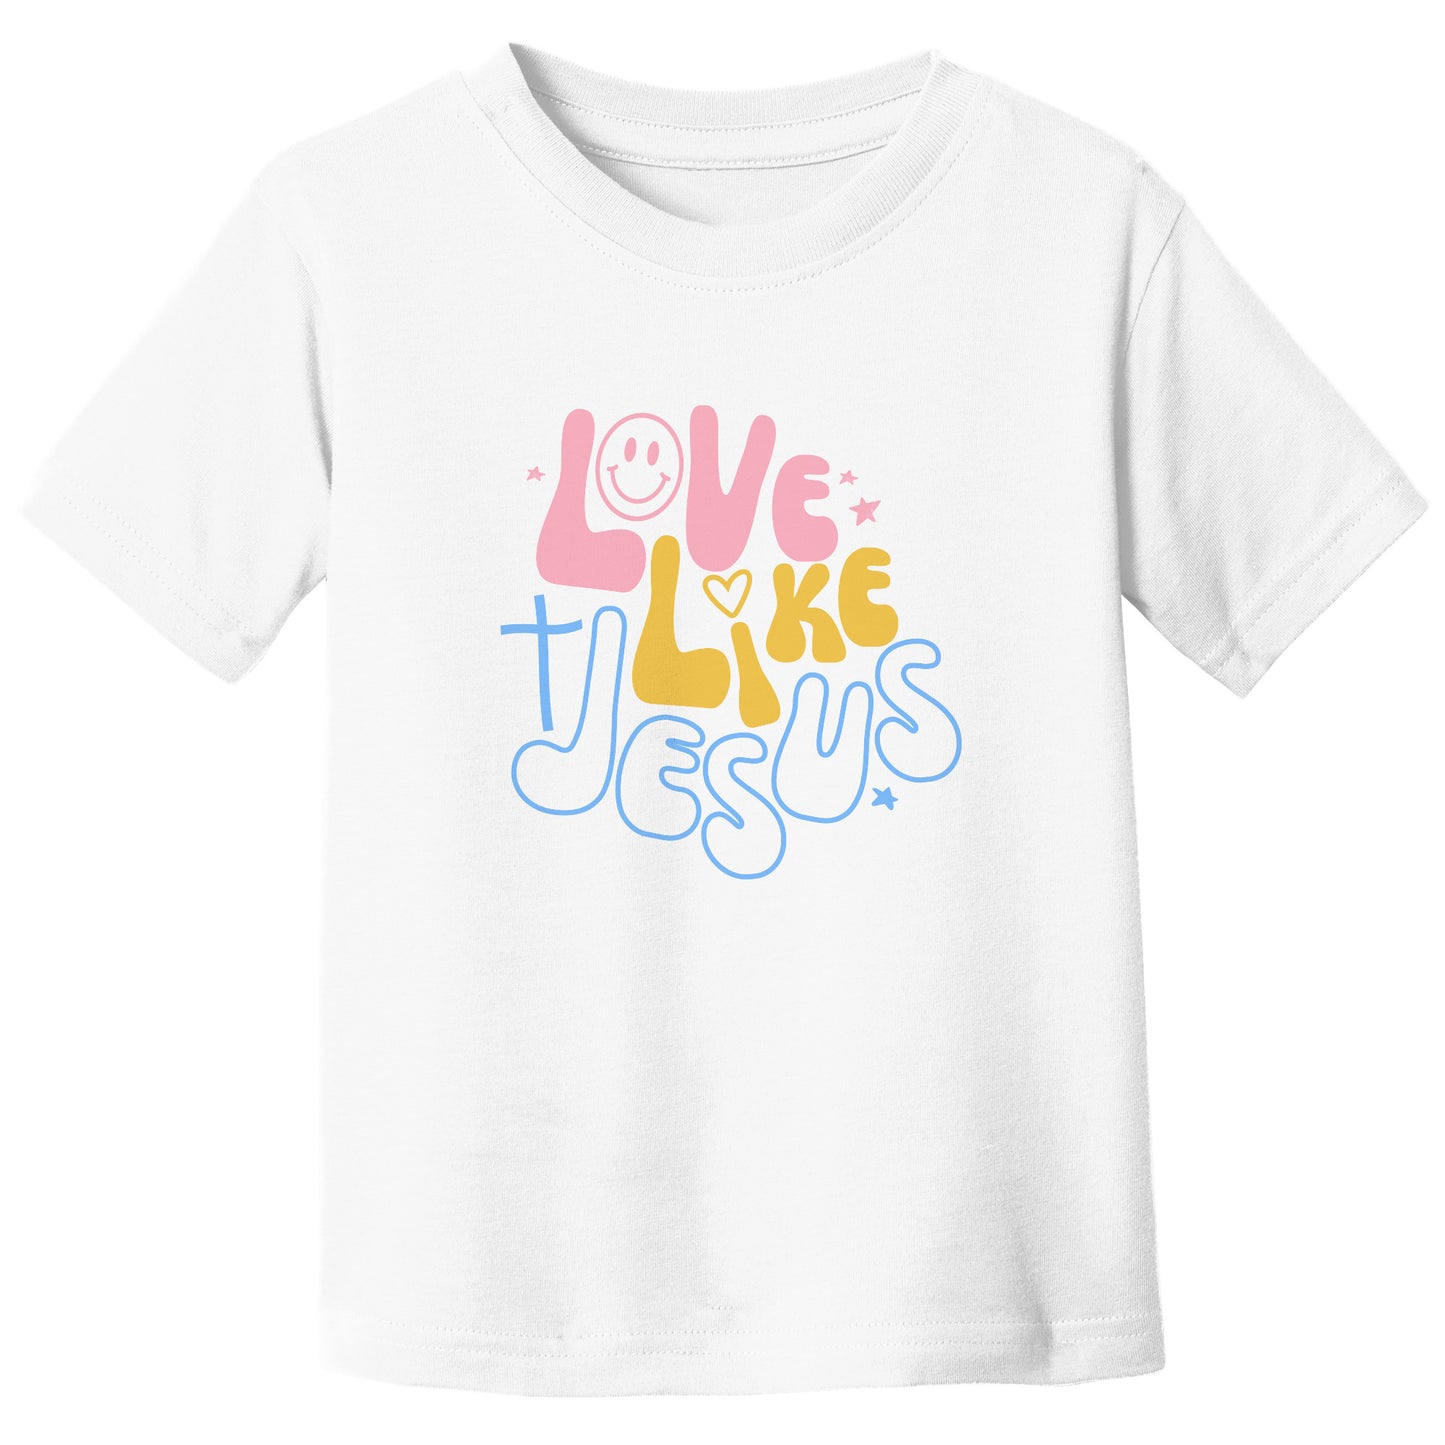 Love Like Jesus Toddler T-Shirt